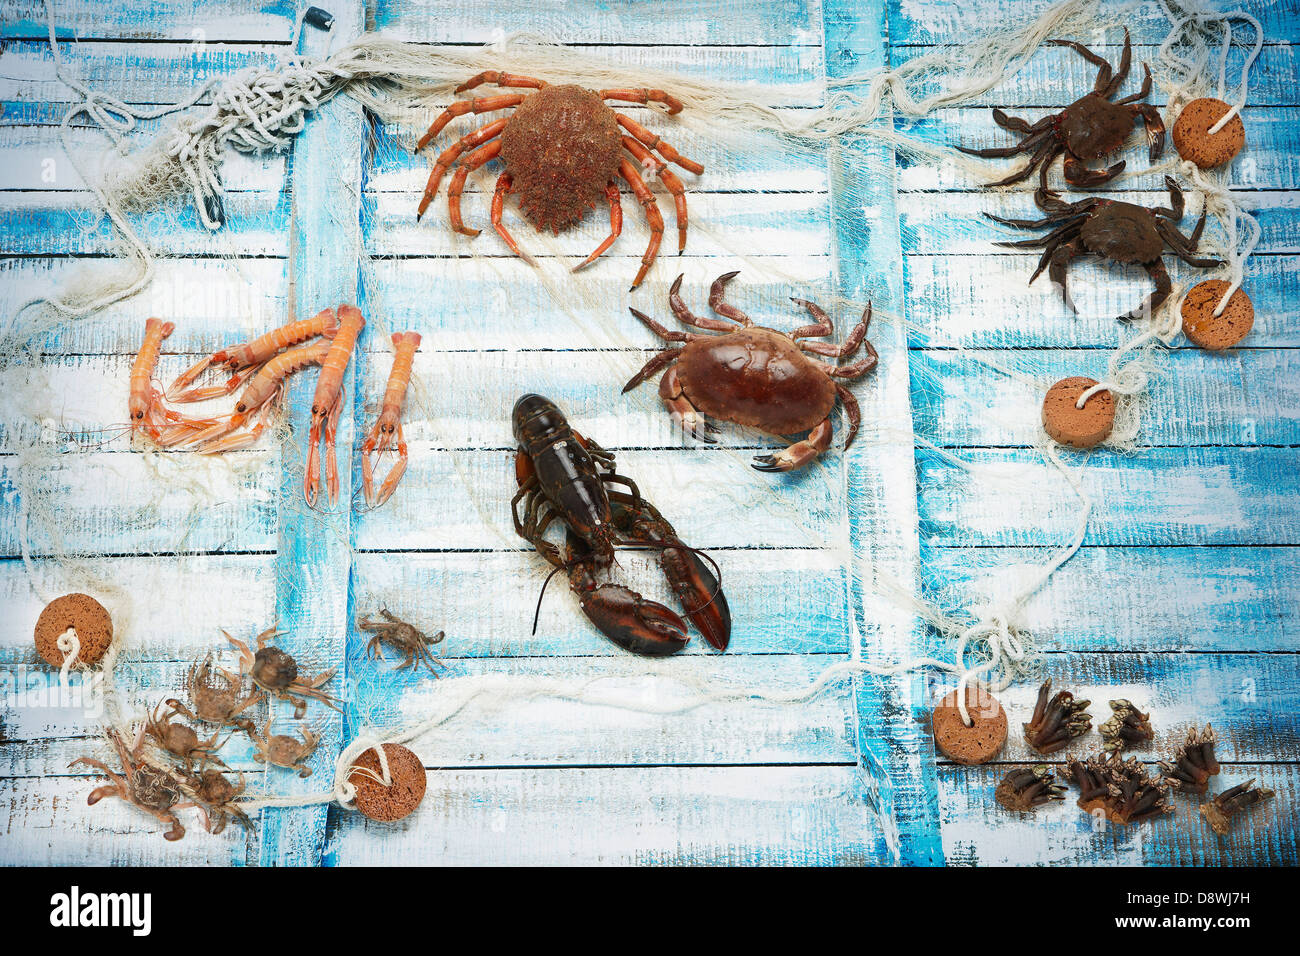 Shellfish composition Stock Photo